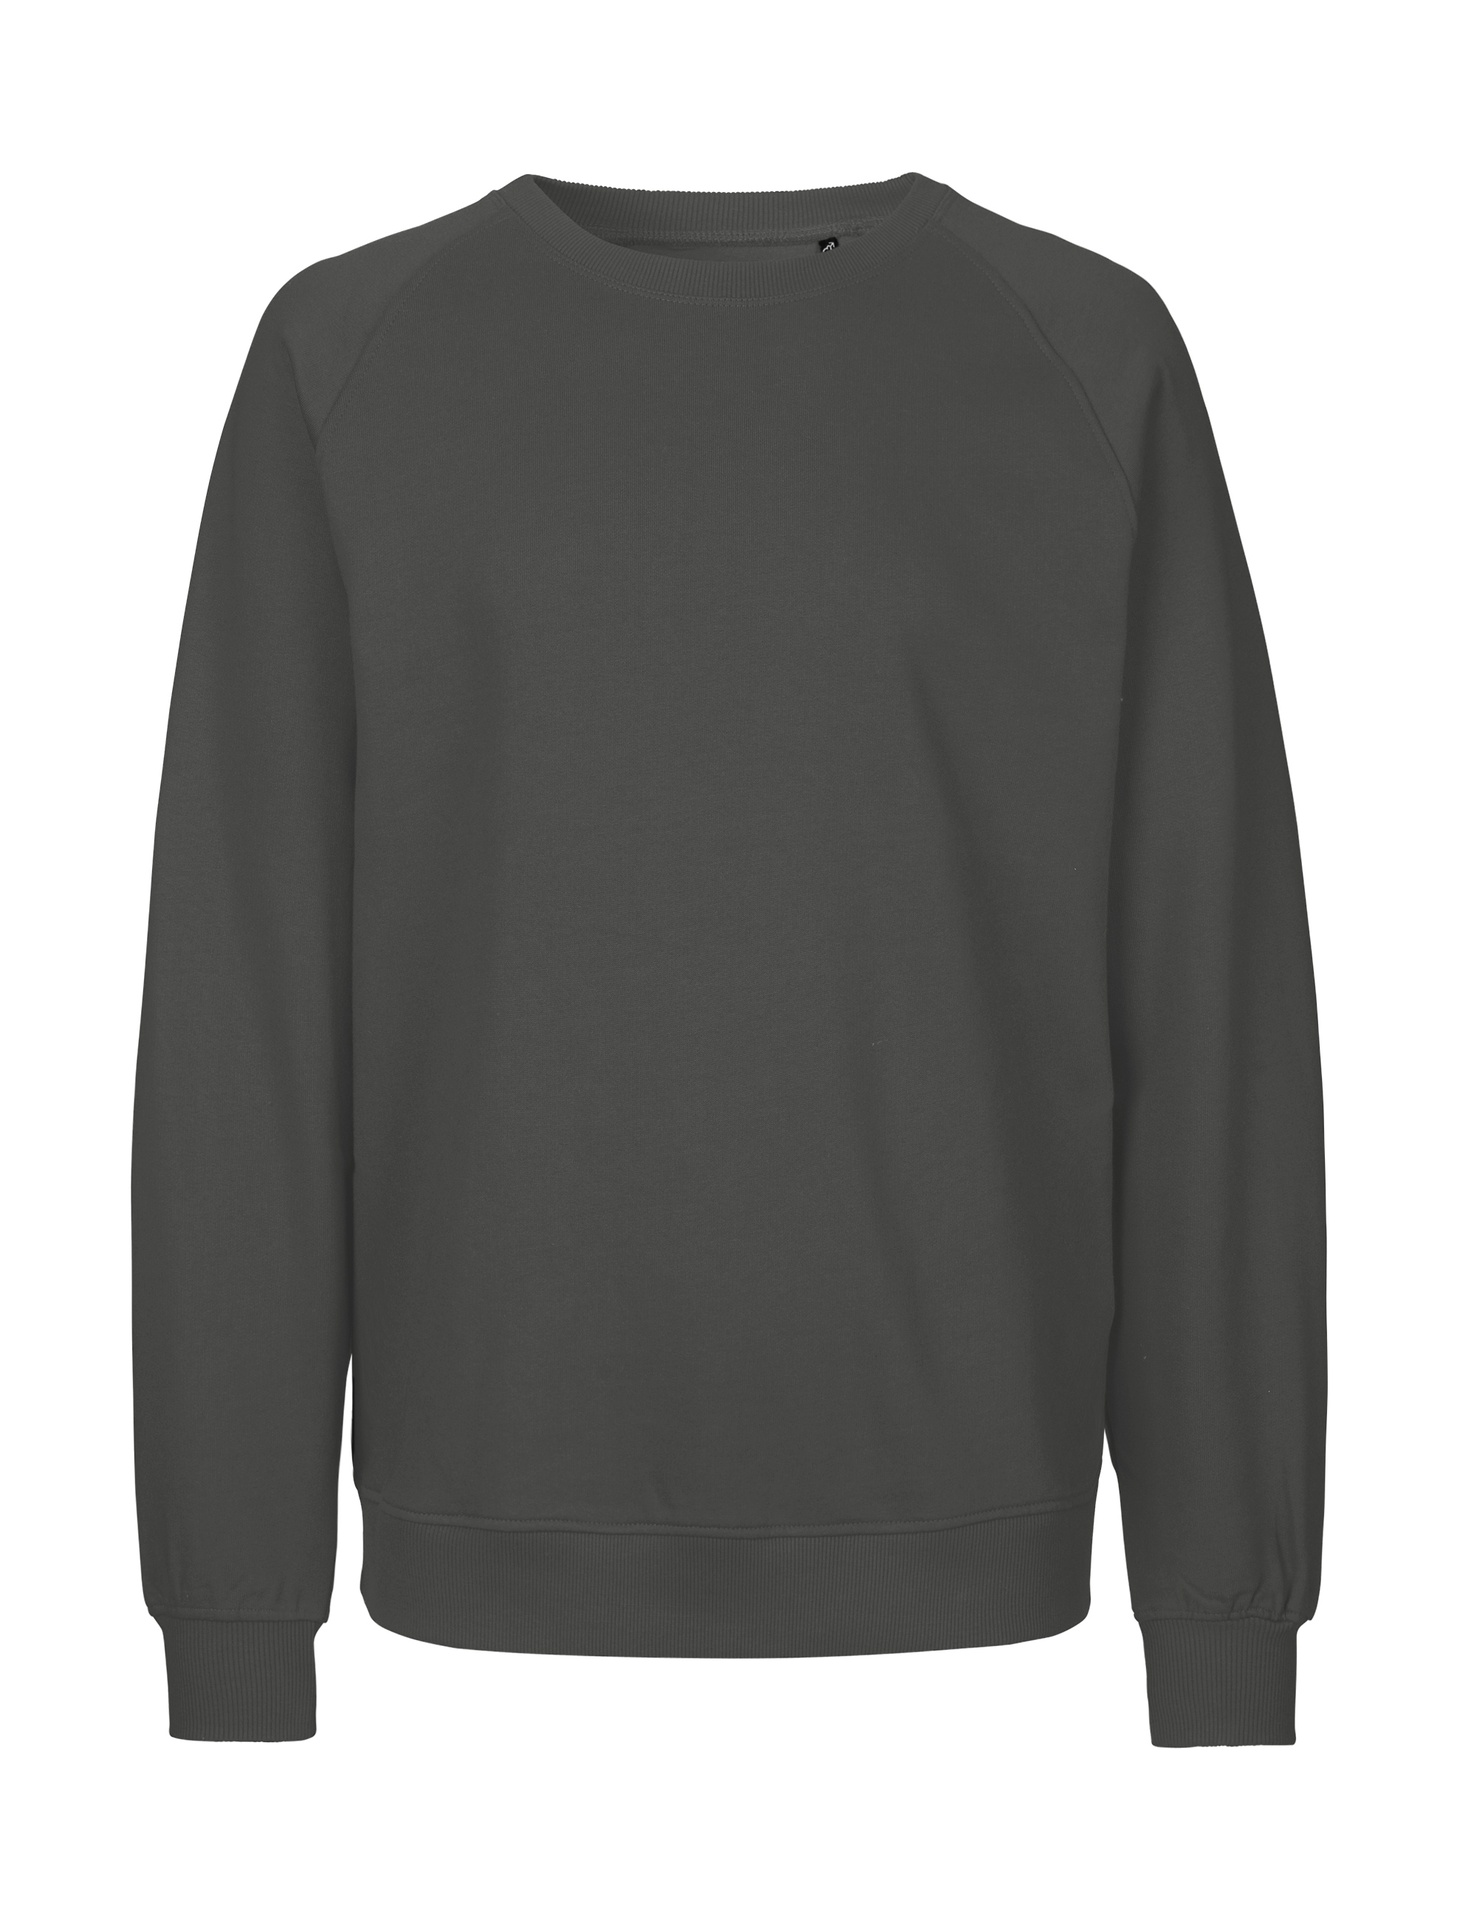 [PR/02692] Unisex Sweatshirt (Charcoal 06, XL)